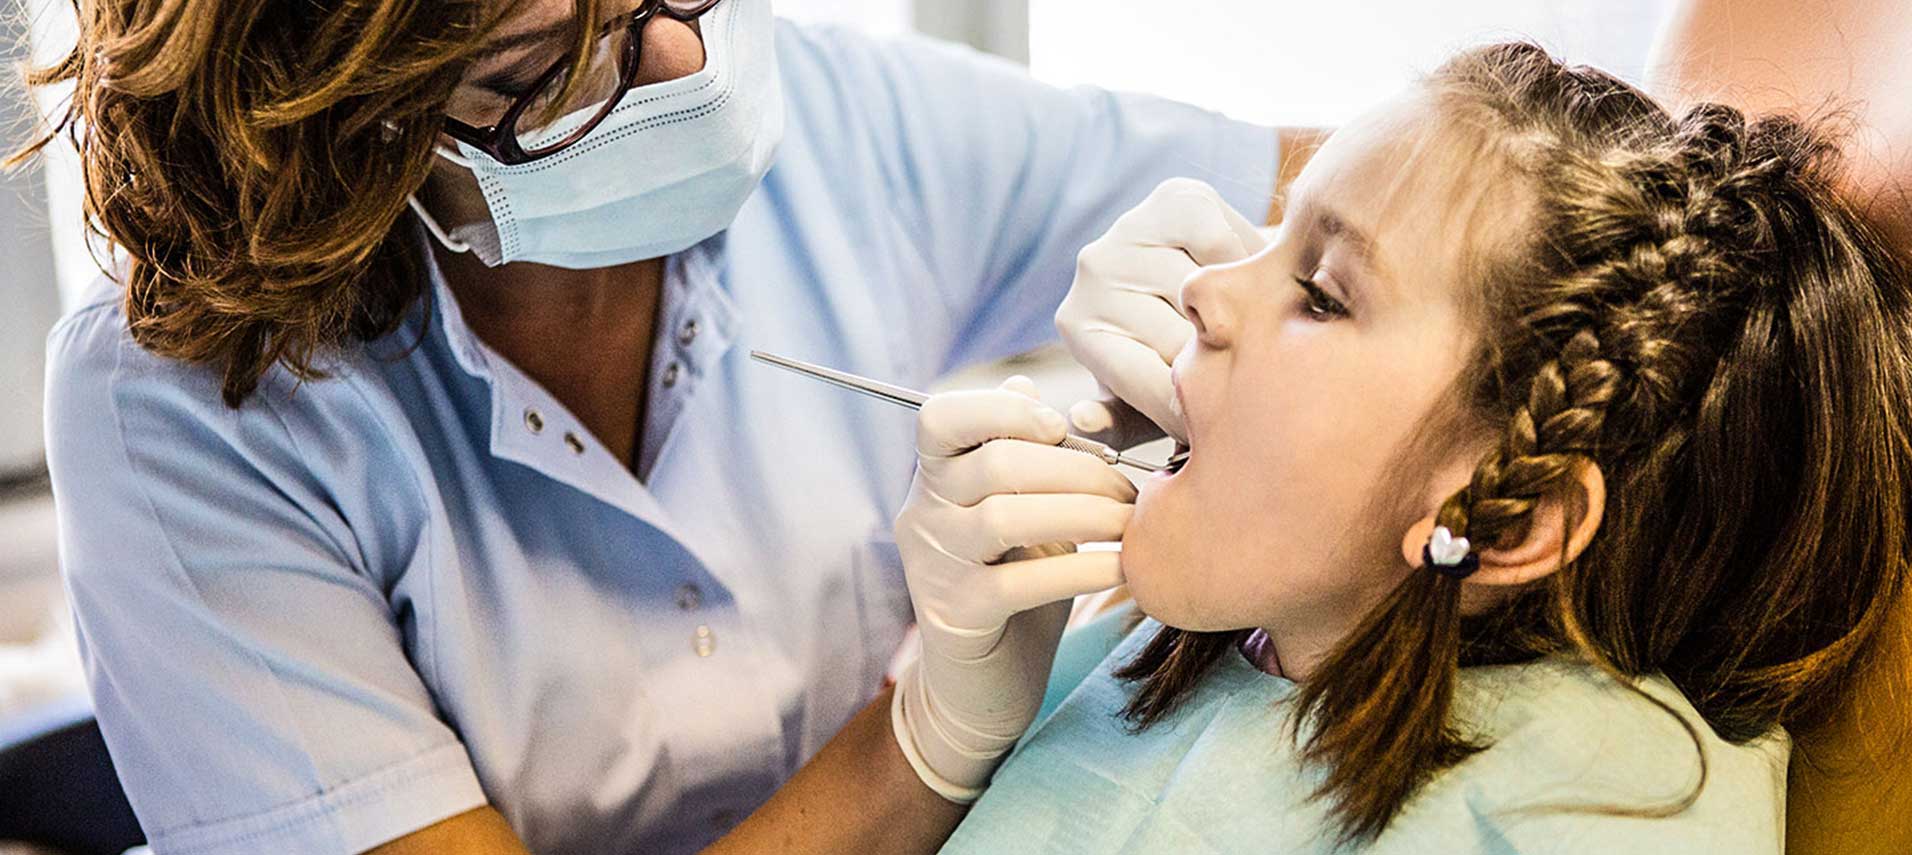 Stomatoloska ordinacija vunjak dental clinic decija stomatologija pregled zuba dete